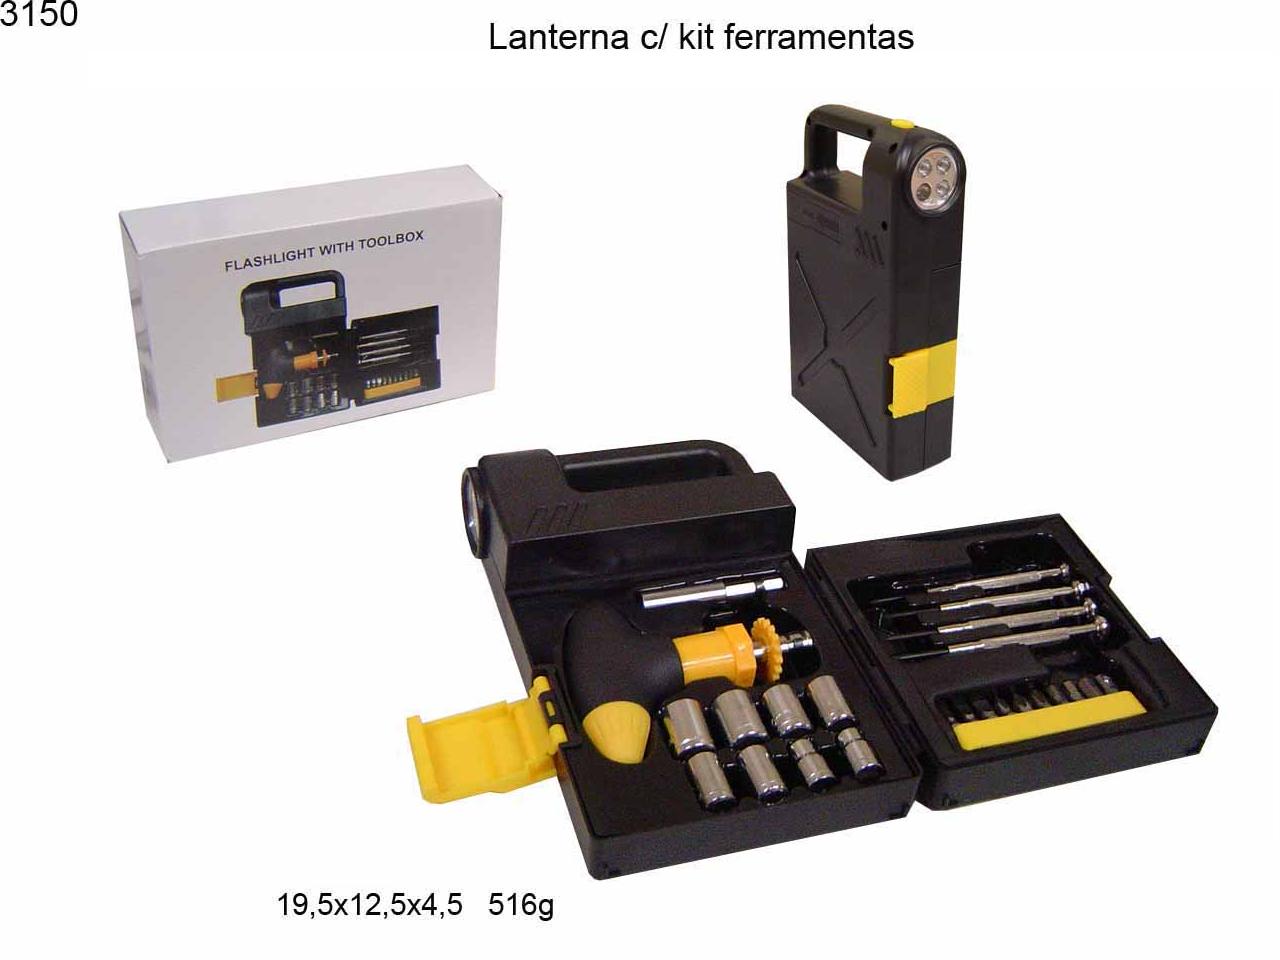 Lanterna c/ kit ferramentas (3150)